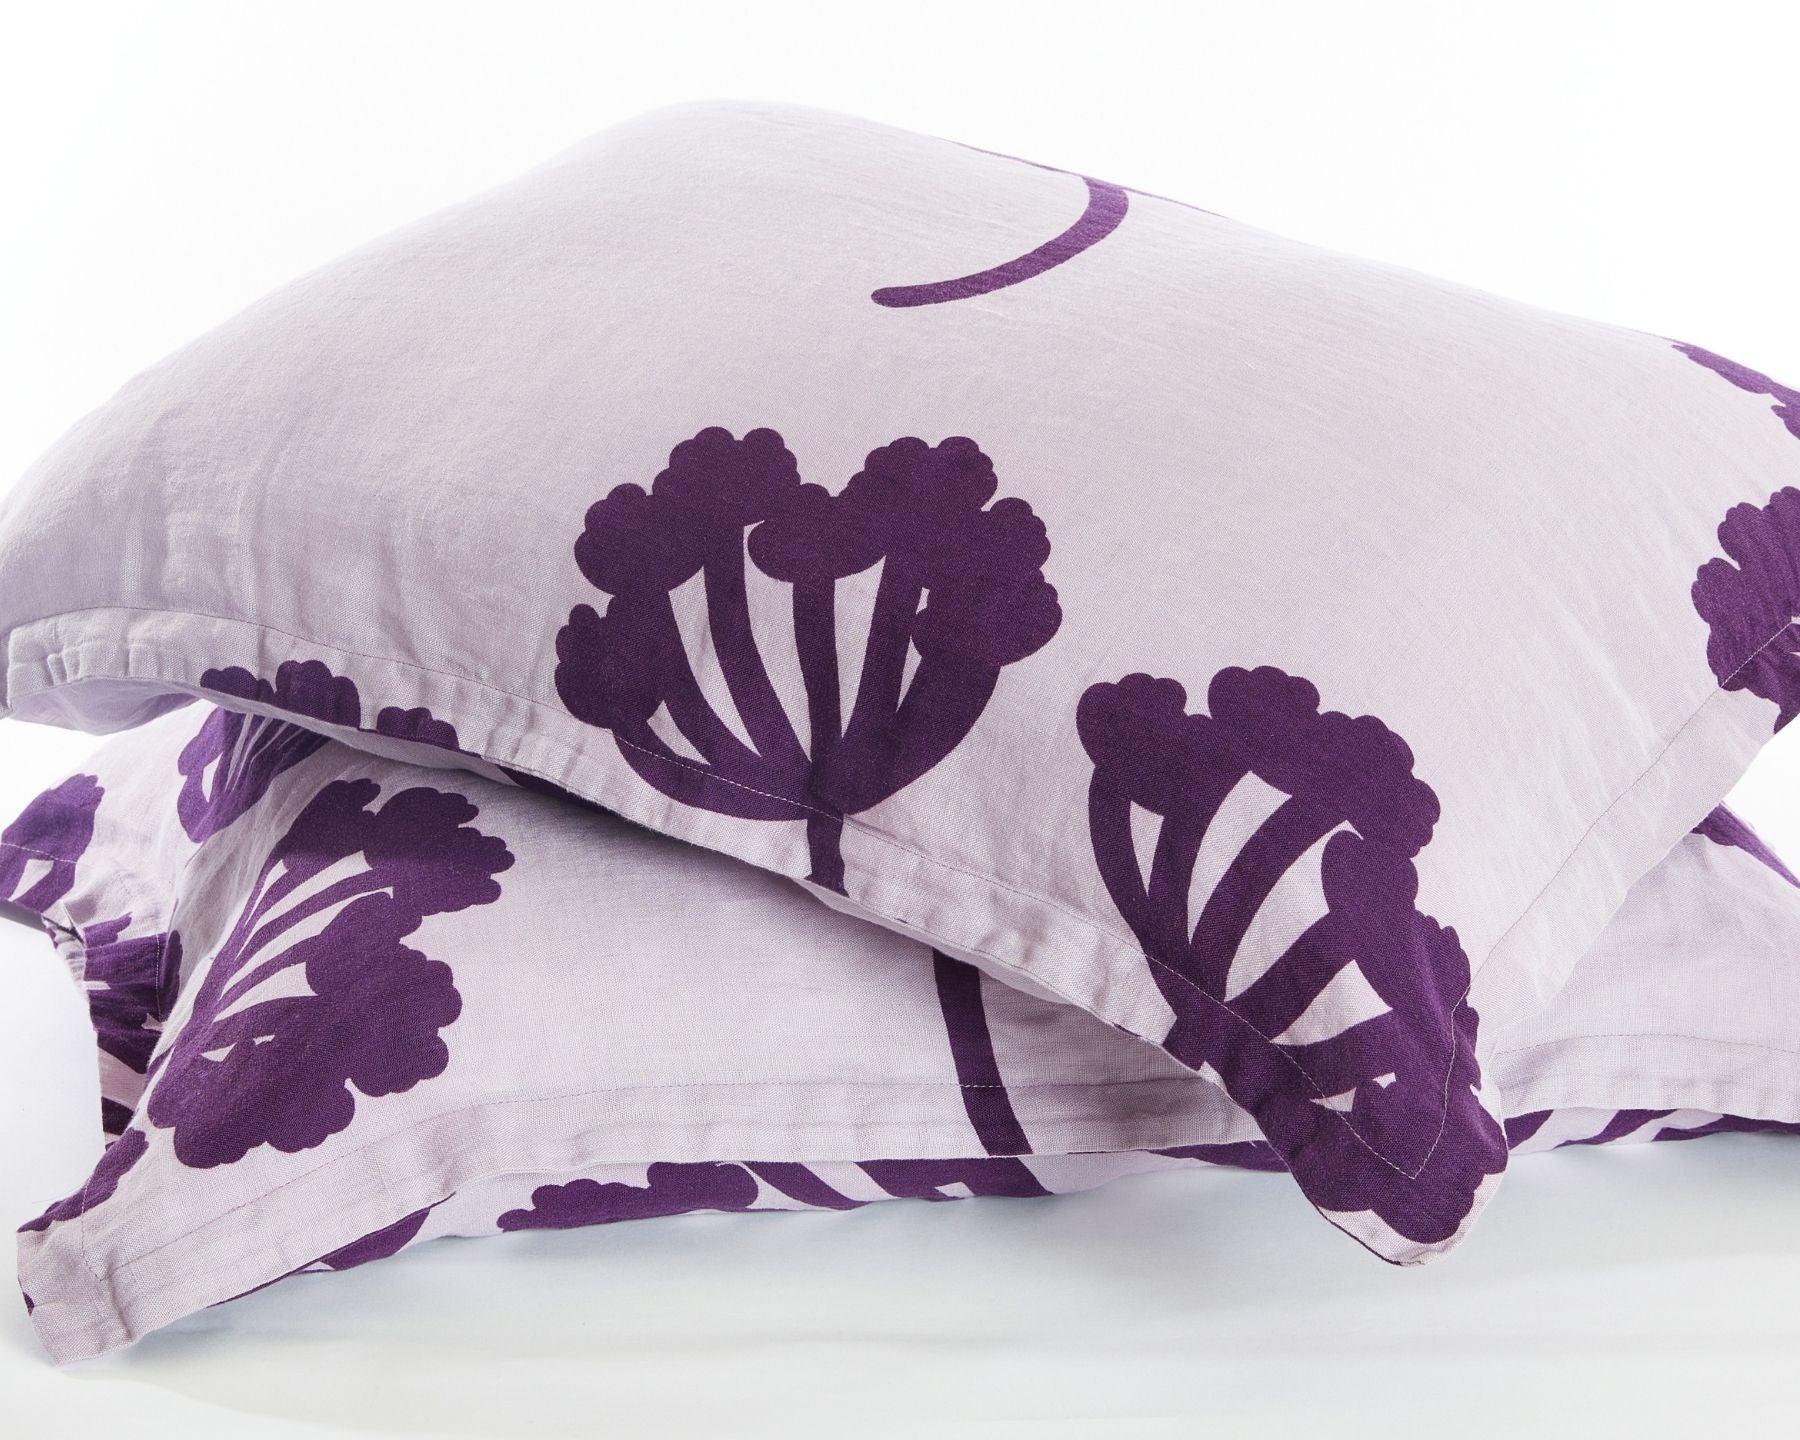 Purple organic European linen duvet cover set with two matching pillow cases in modern Scandinavian floral design - Twin / Standard, Full/Queen / Standard, King/Cal-King / Standard, King/Cal-King / King